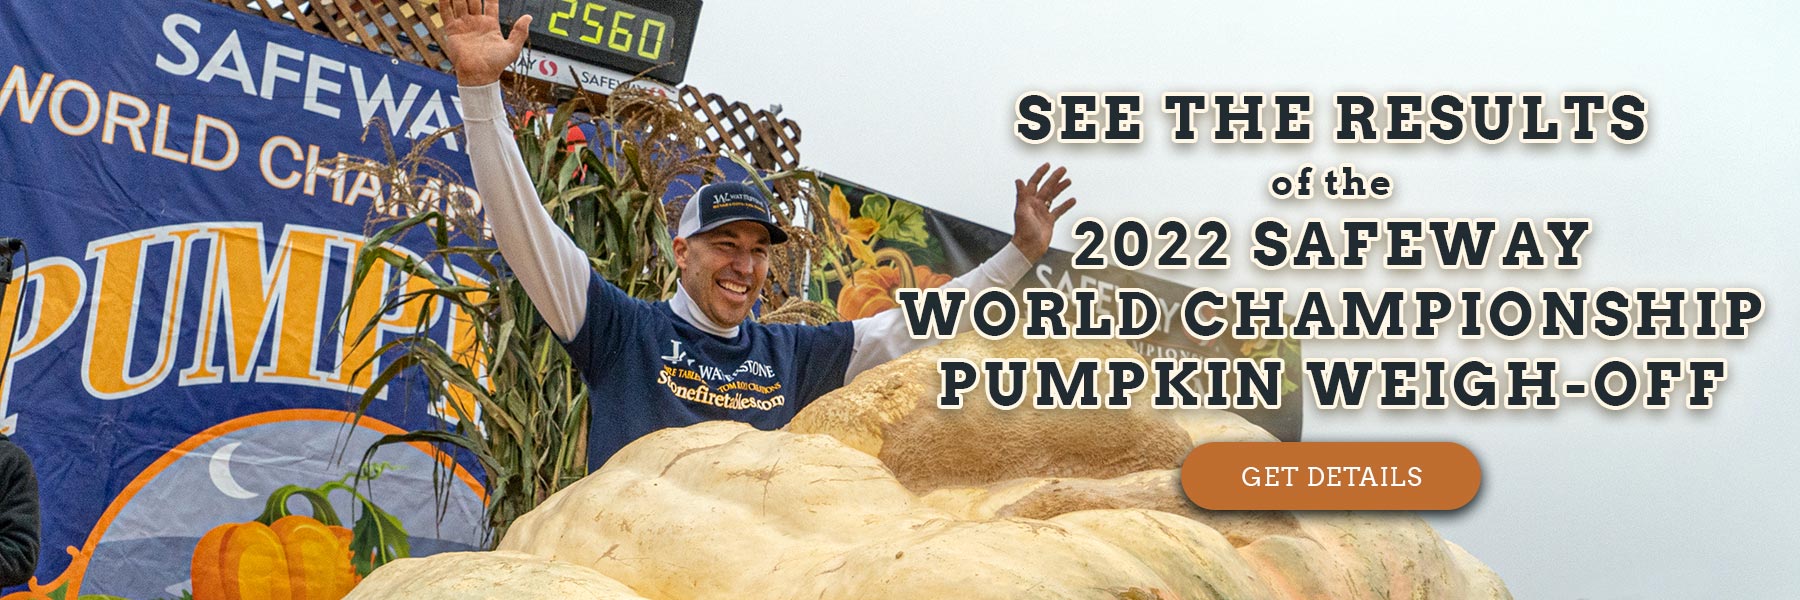 2022 Safeway World Championship Pumpkin Weigh-Off Winner